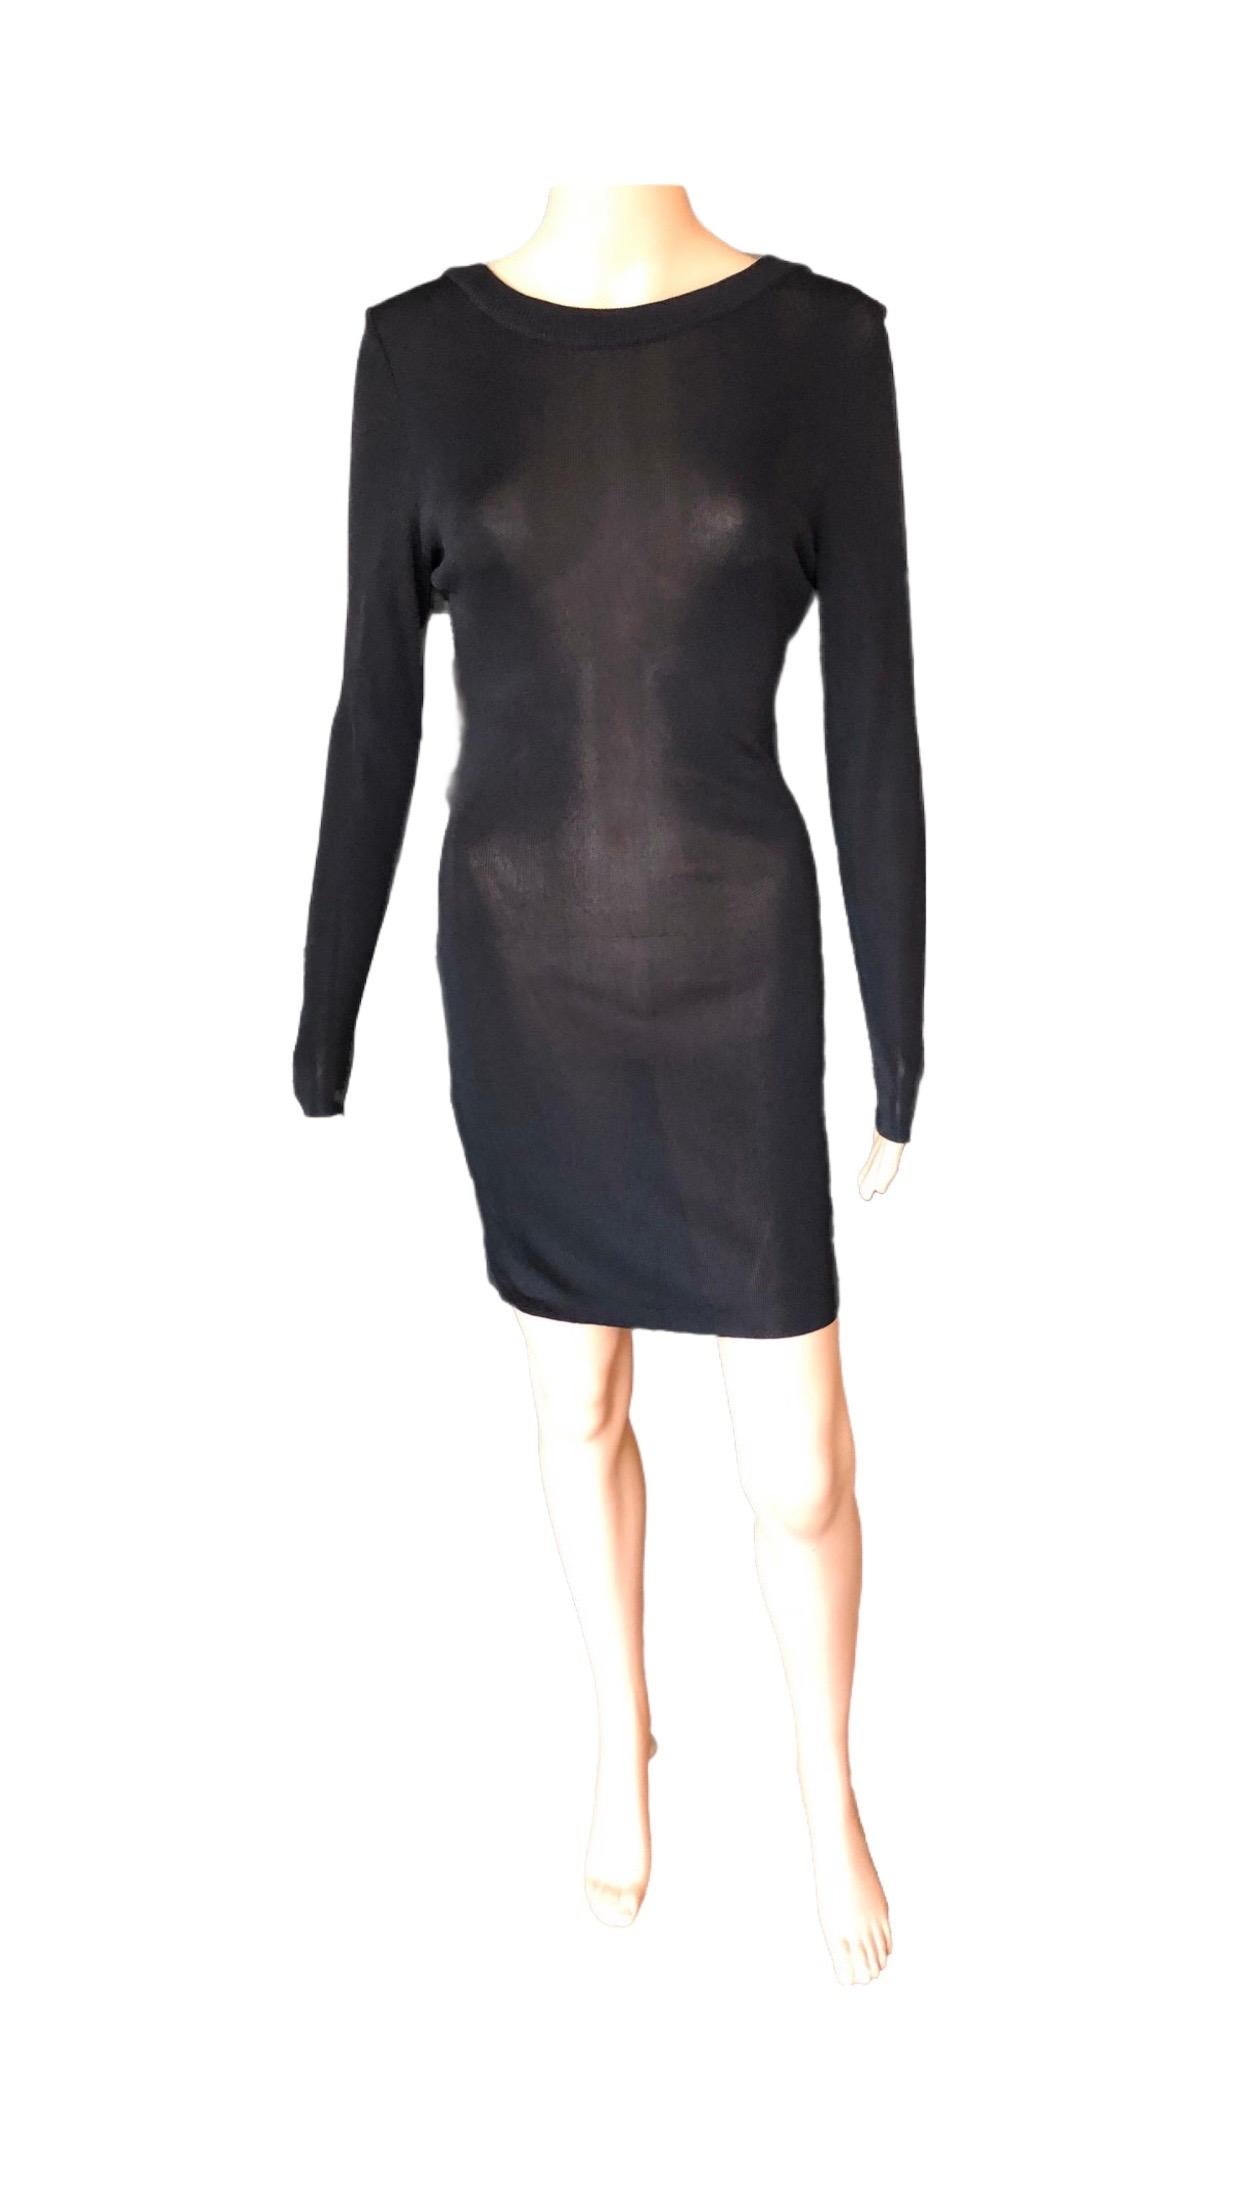 Gianni Versace c. 1980 Vintage Semi-Sheer Bodycon Knit Black Dress For Sale 10